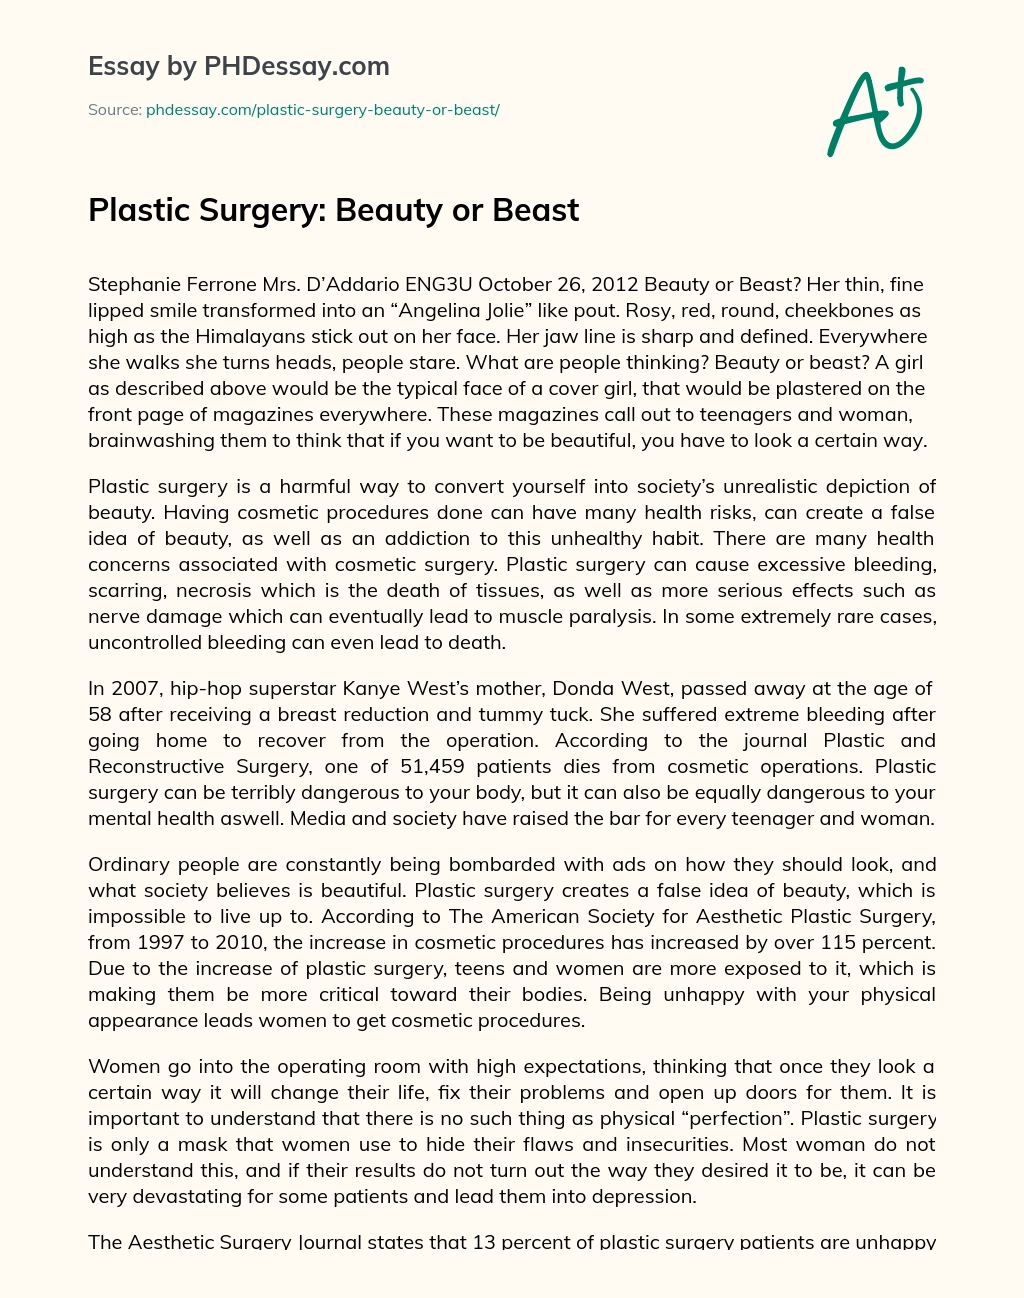 Plastic Surgery: Beauty or Beast essay